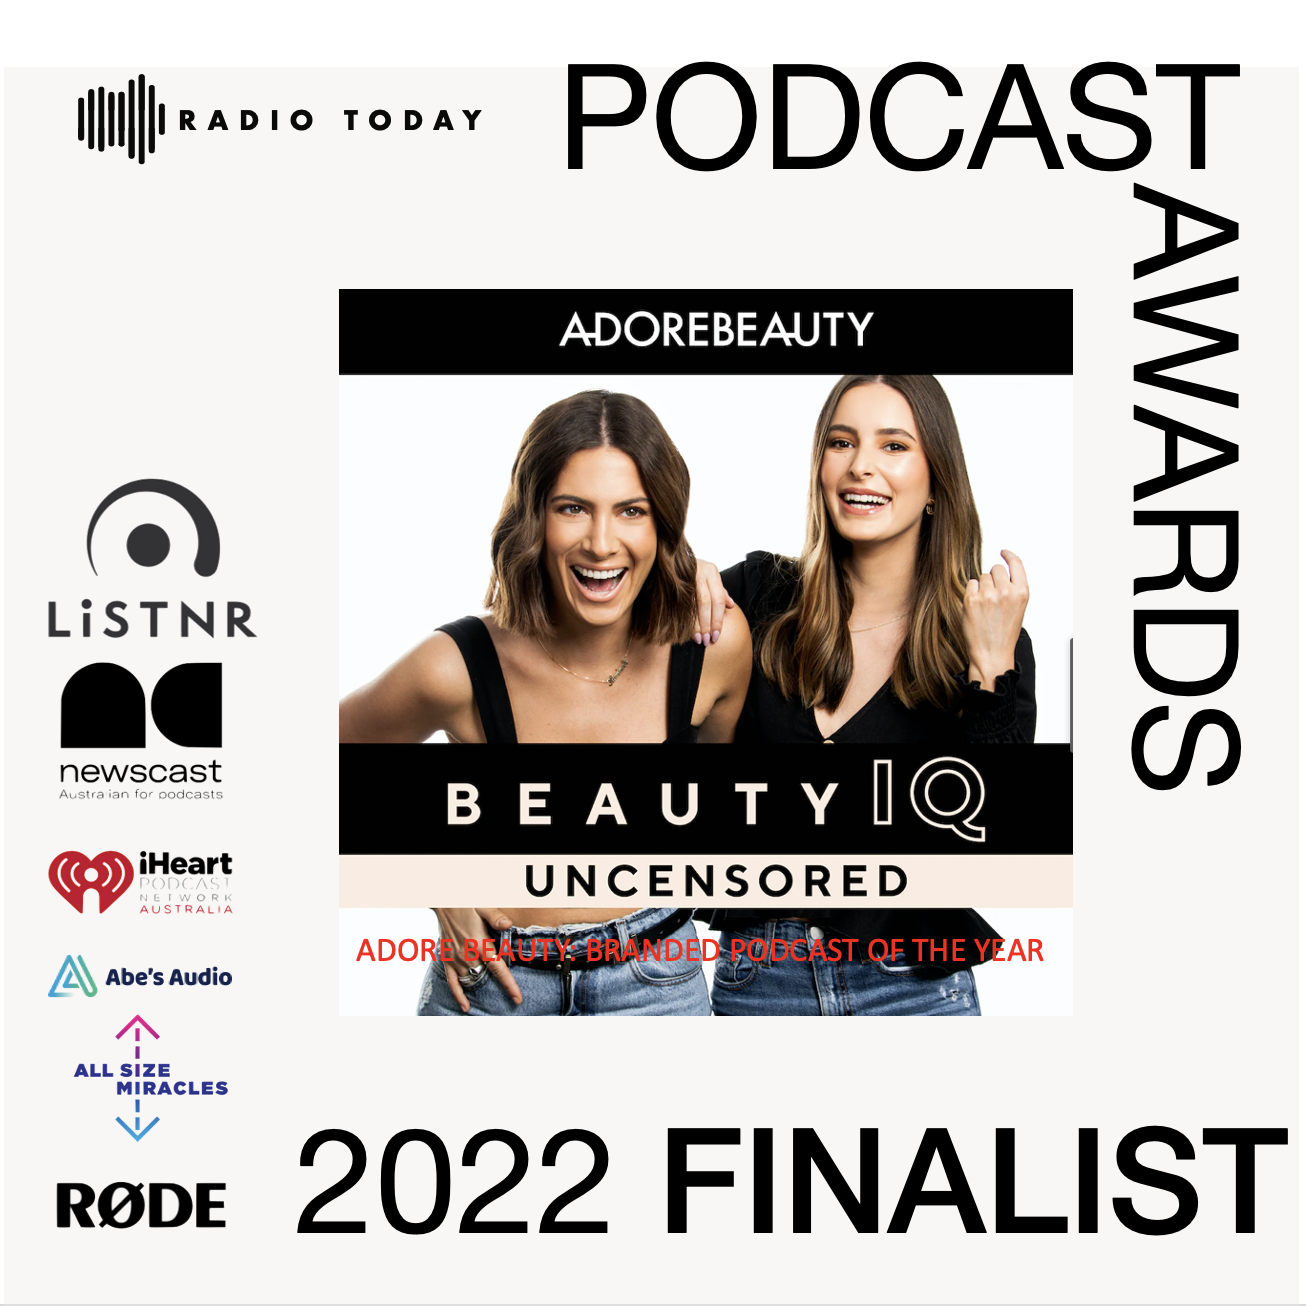 Radio Today Podcast Award Entry - Adore Beautys Beauty IQ Uncensored